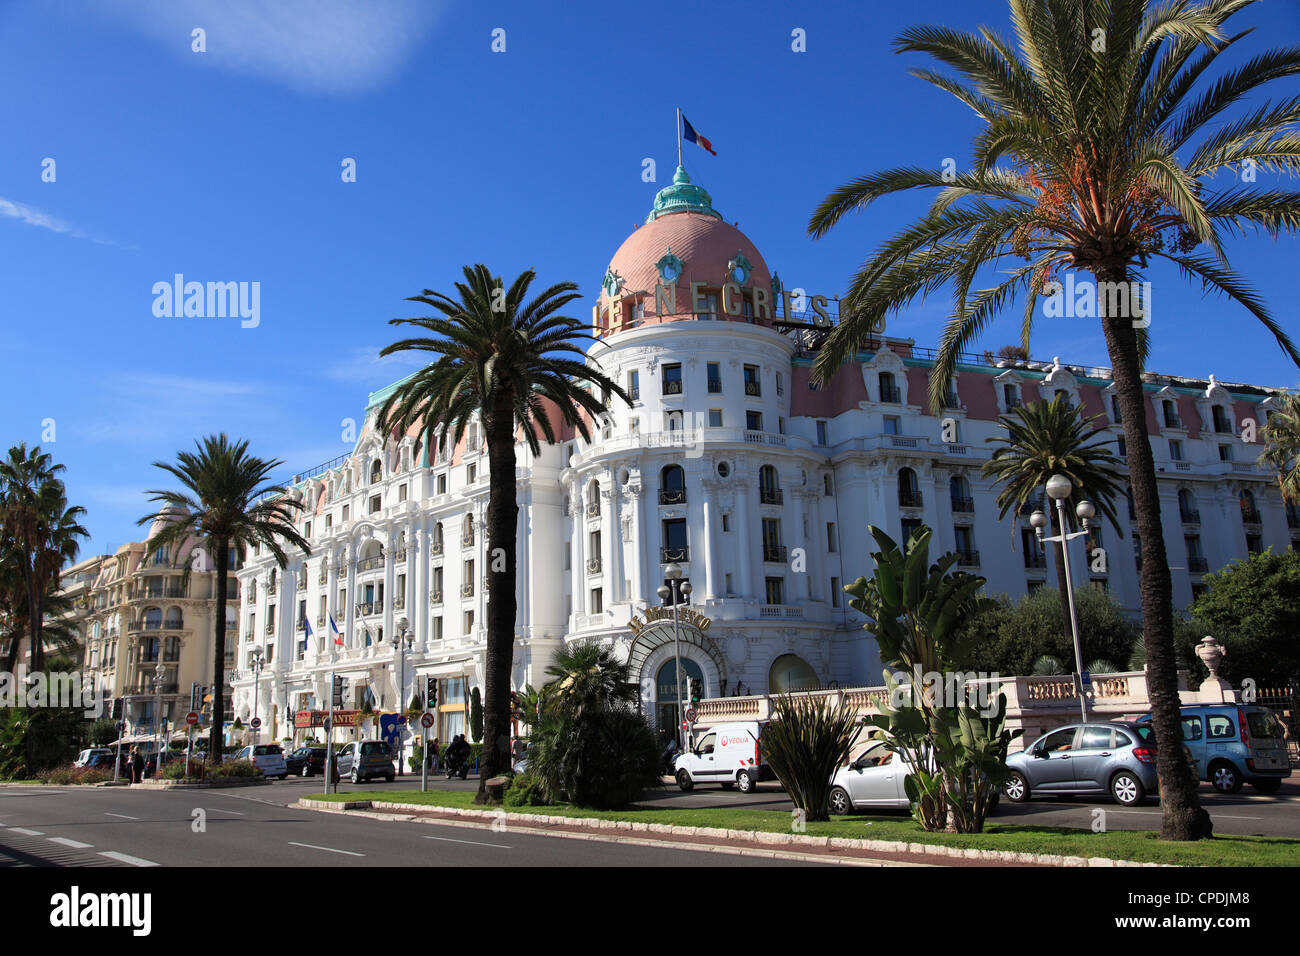 Hotel Negresco, Promenade des Anglais, Nice, Alpes Maritimes, Cote d'Azur, French Riviera, Provence, France, Europe Stock Photo